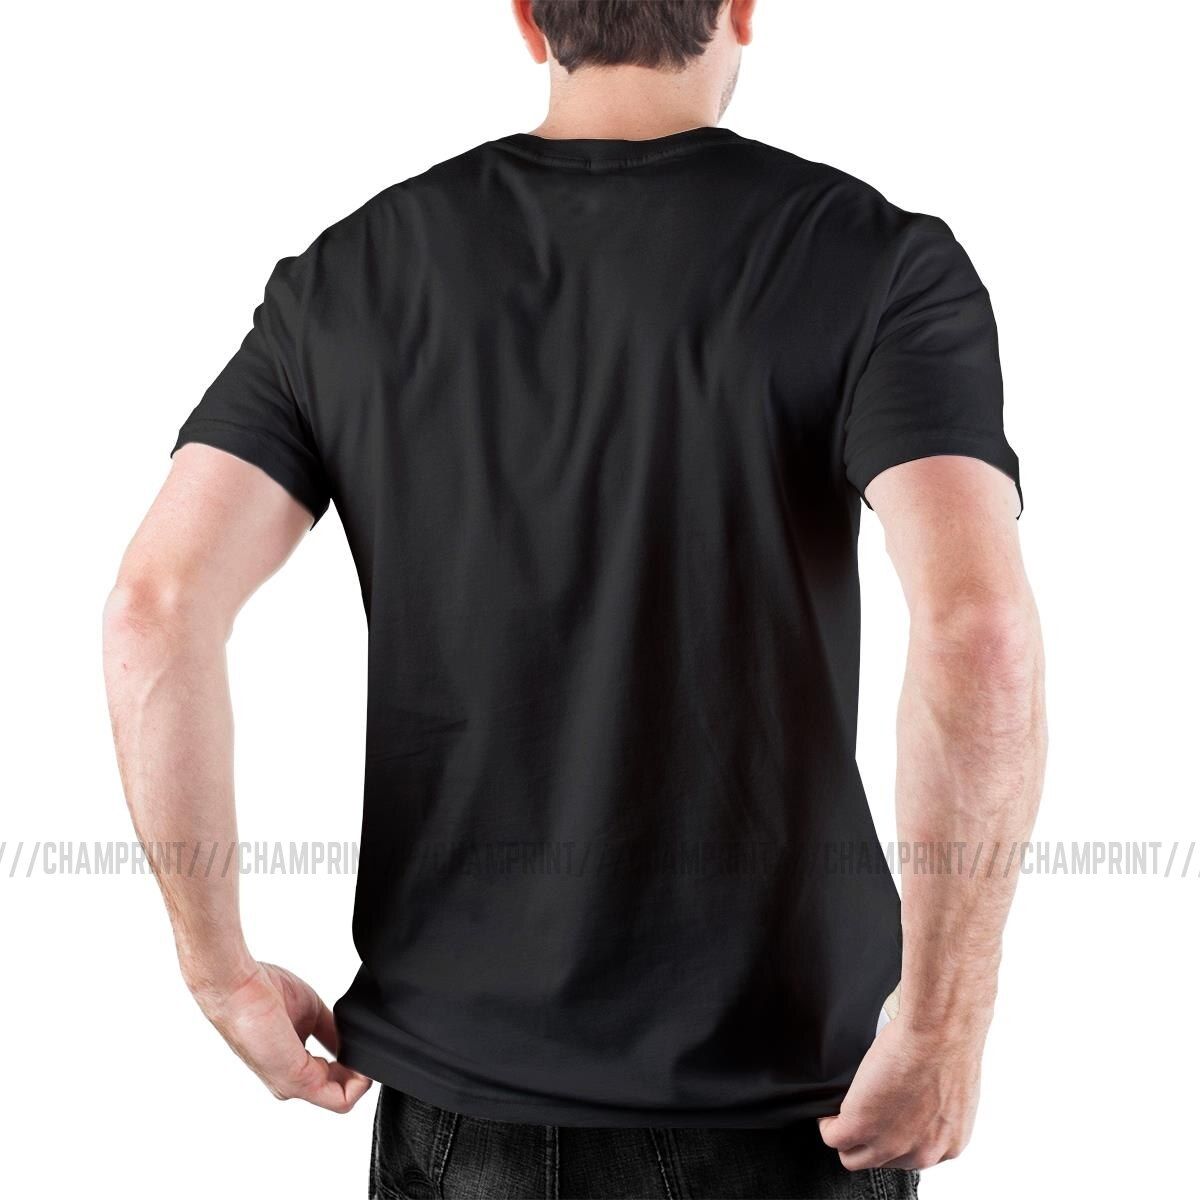 Steins;Gate – Okabe and Kurisu T-Shirts (15+ Designs) T-Shirts & Tank Tops